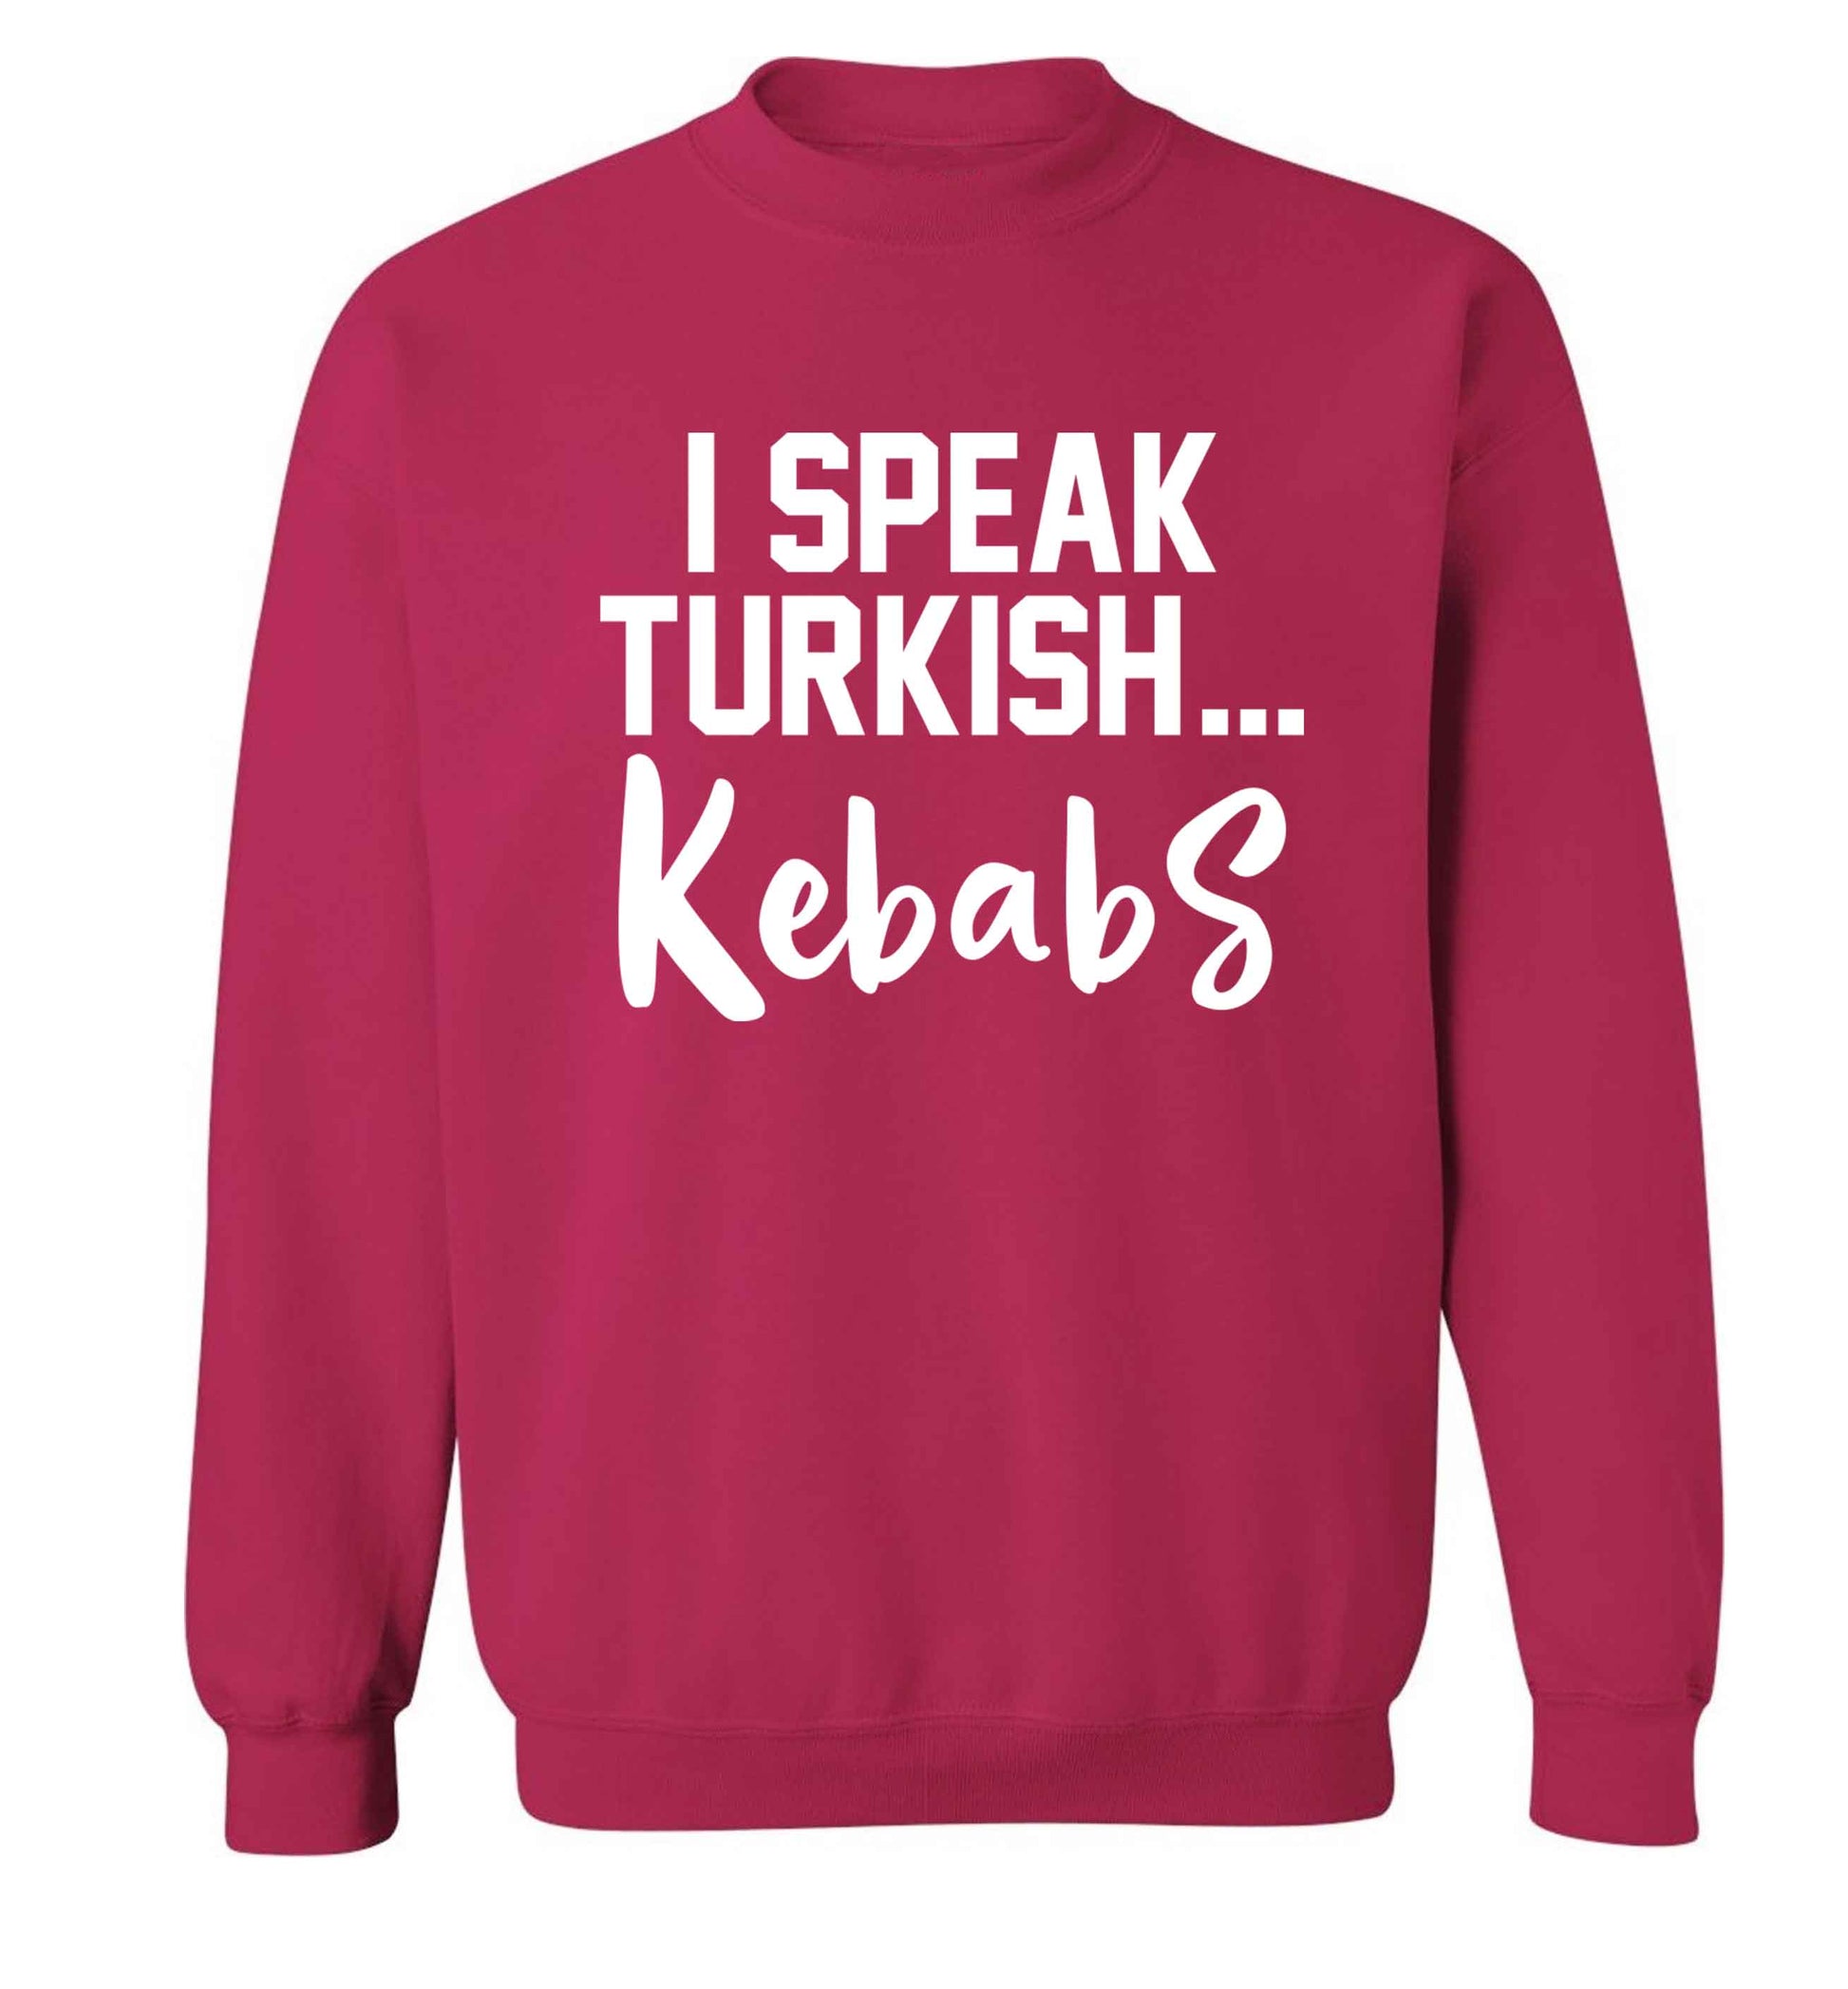 I speak Turkish...kebabs Adult's unisex pink Sweater 2XL